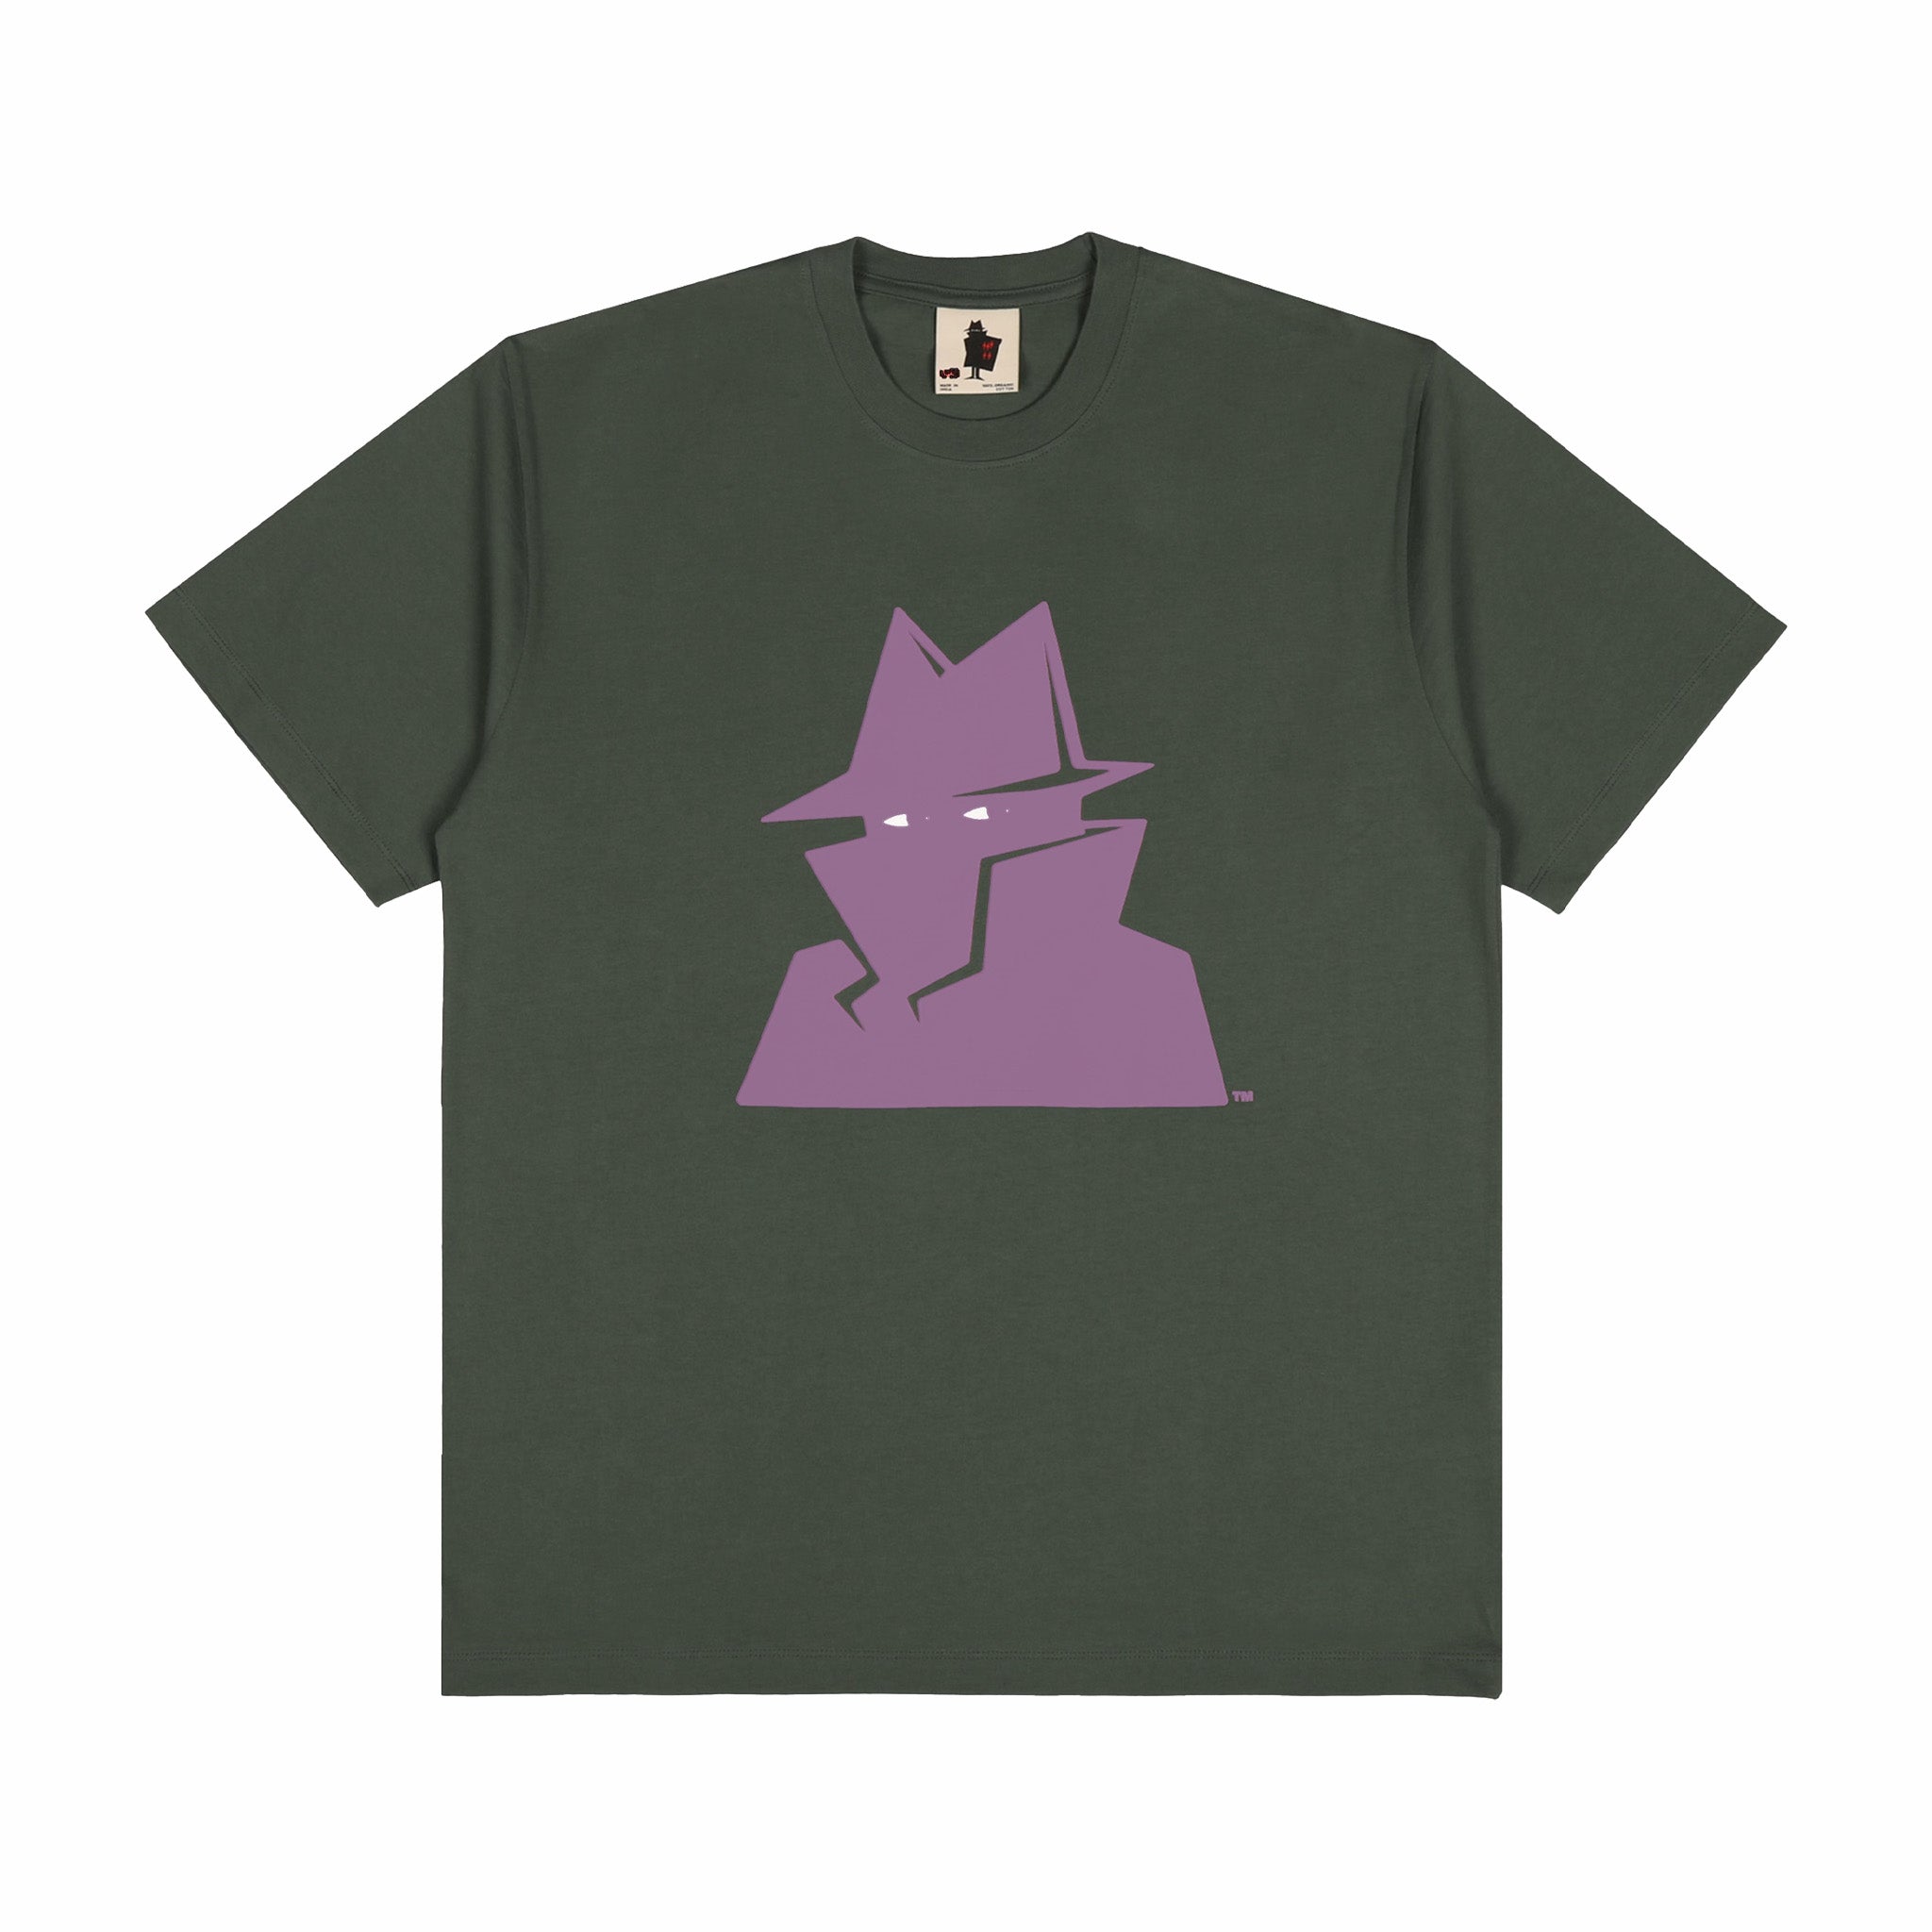 Real Bad Man Crimewave TM T-Shirt (Hunter) - August Shop